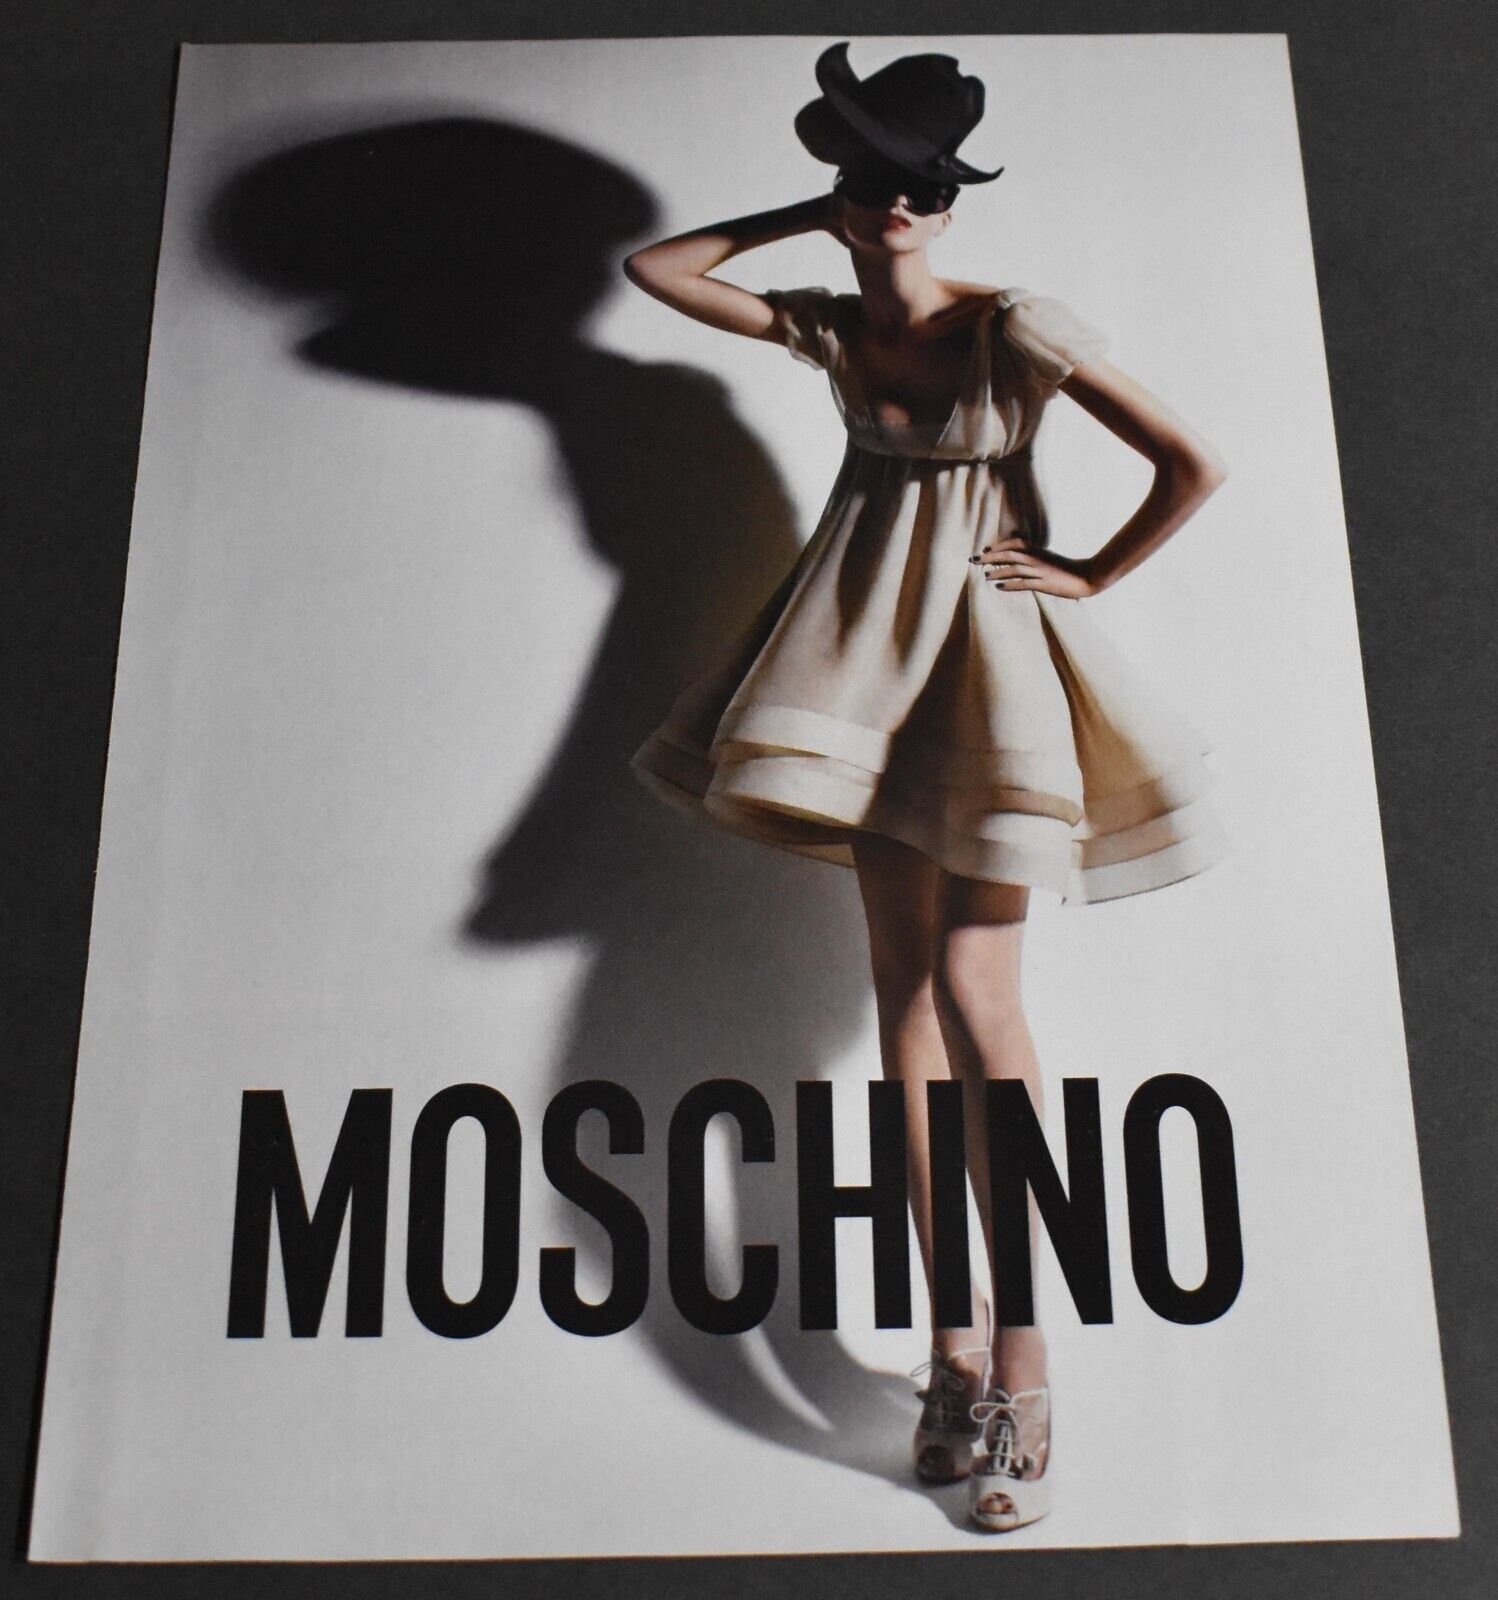 2008 Print Ad Clothing Fashion Style Heels Art Moschino Long Legs Sexy Dress